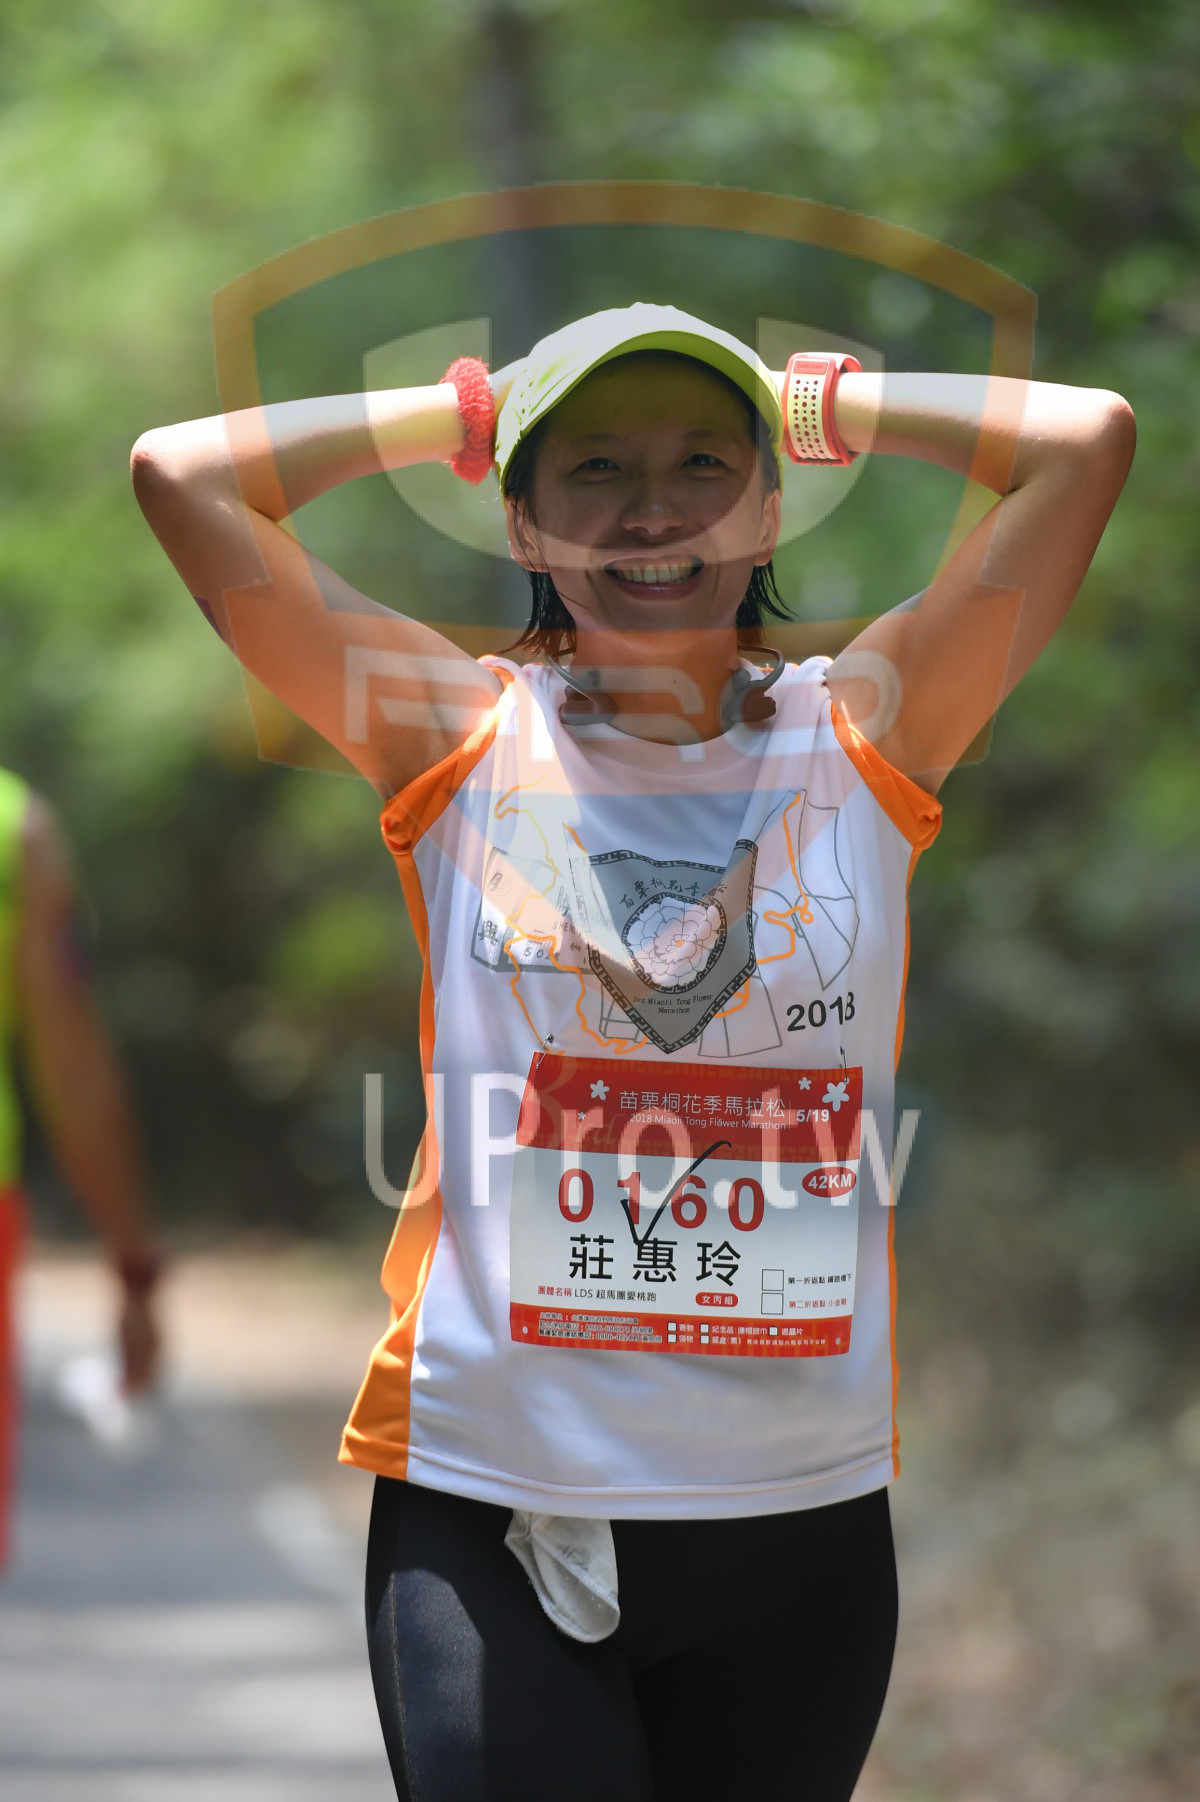 2013,*15119,2018 Miaoli Tong Fiswer Marathon,0160,42KM,.., .sw,■,■'EGG,䙥)T,■,@h.|綠色隧道6|中年人